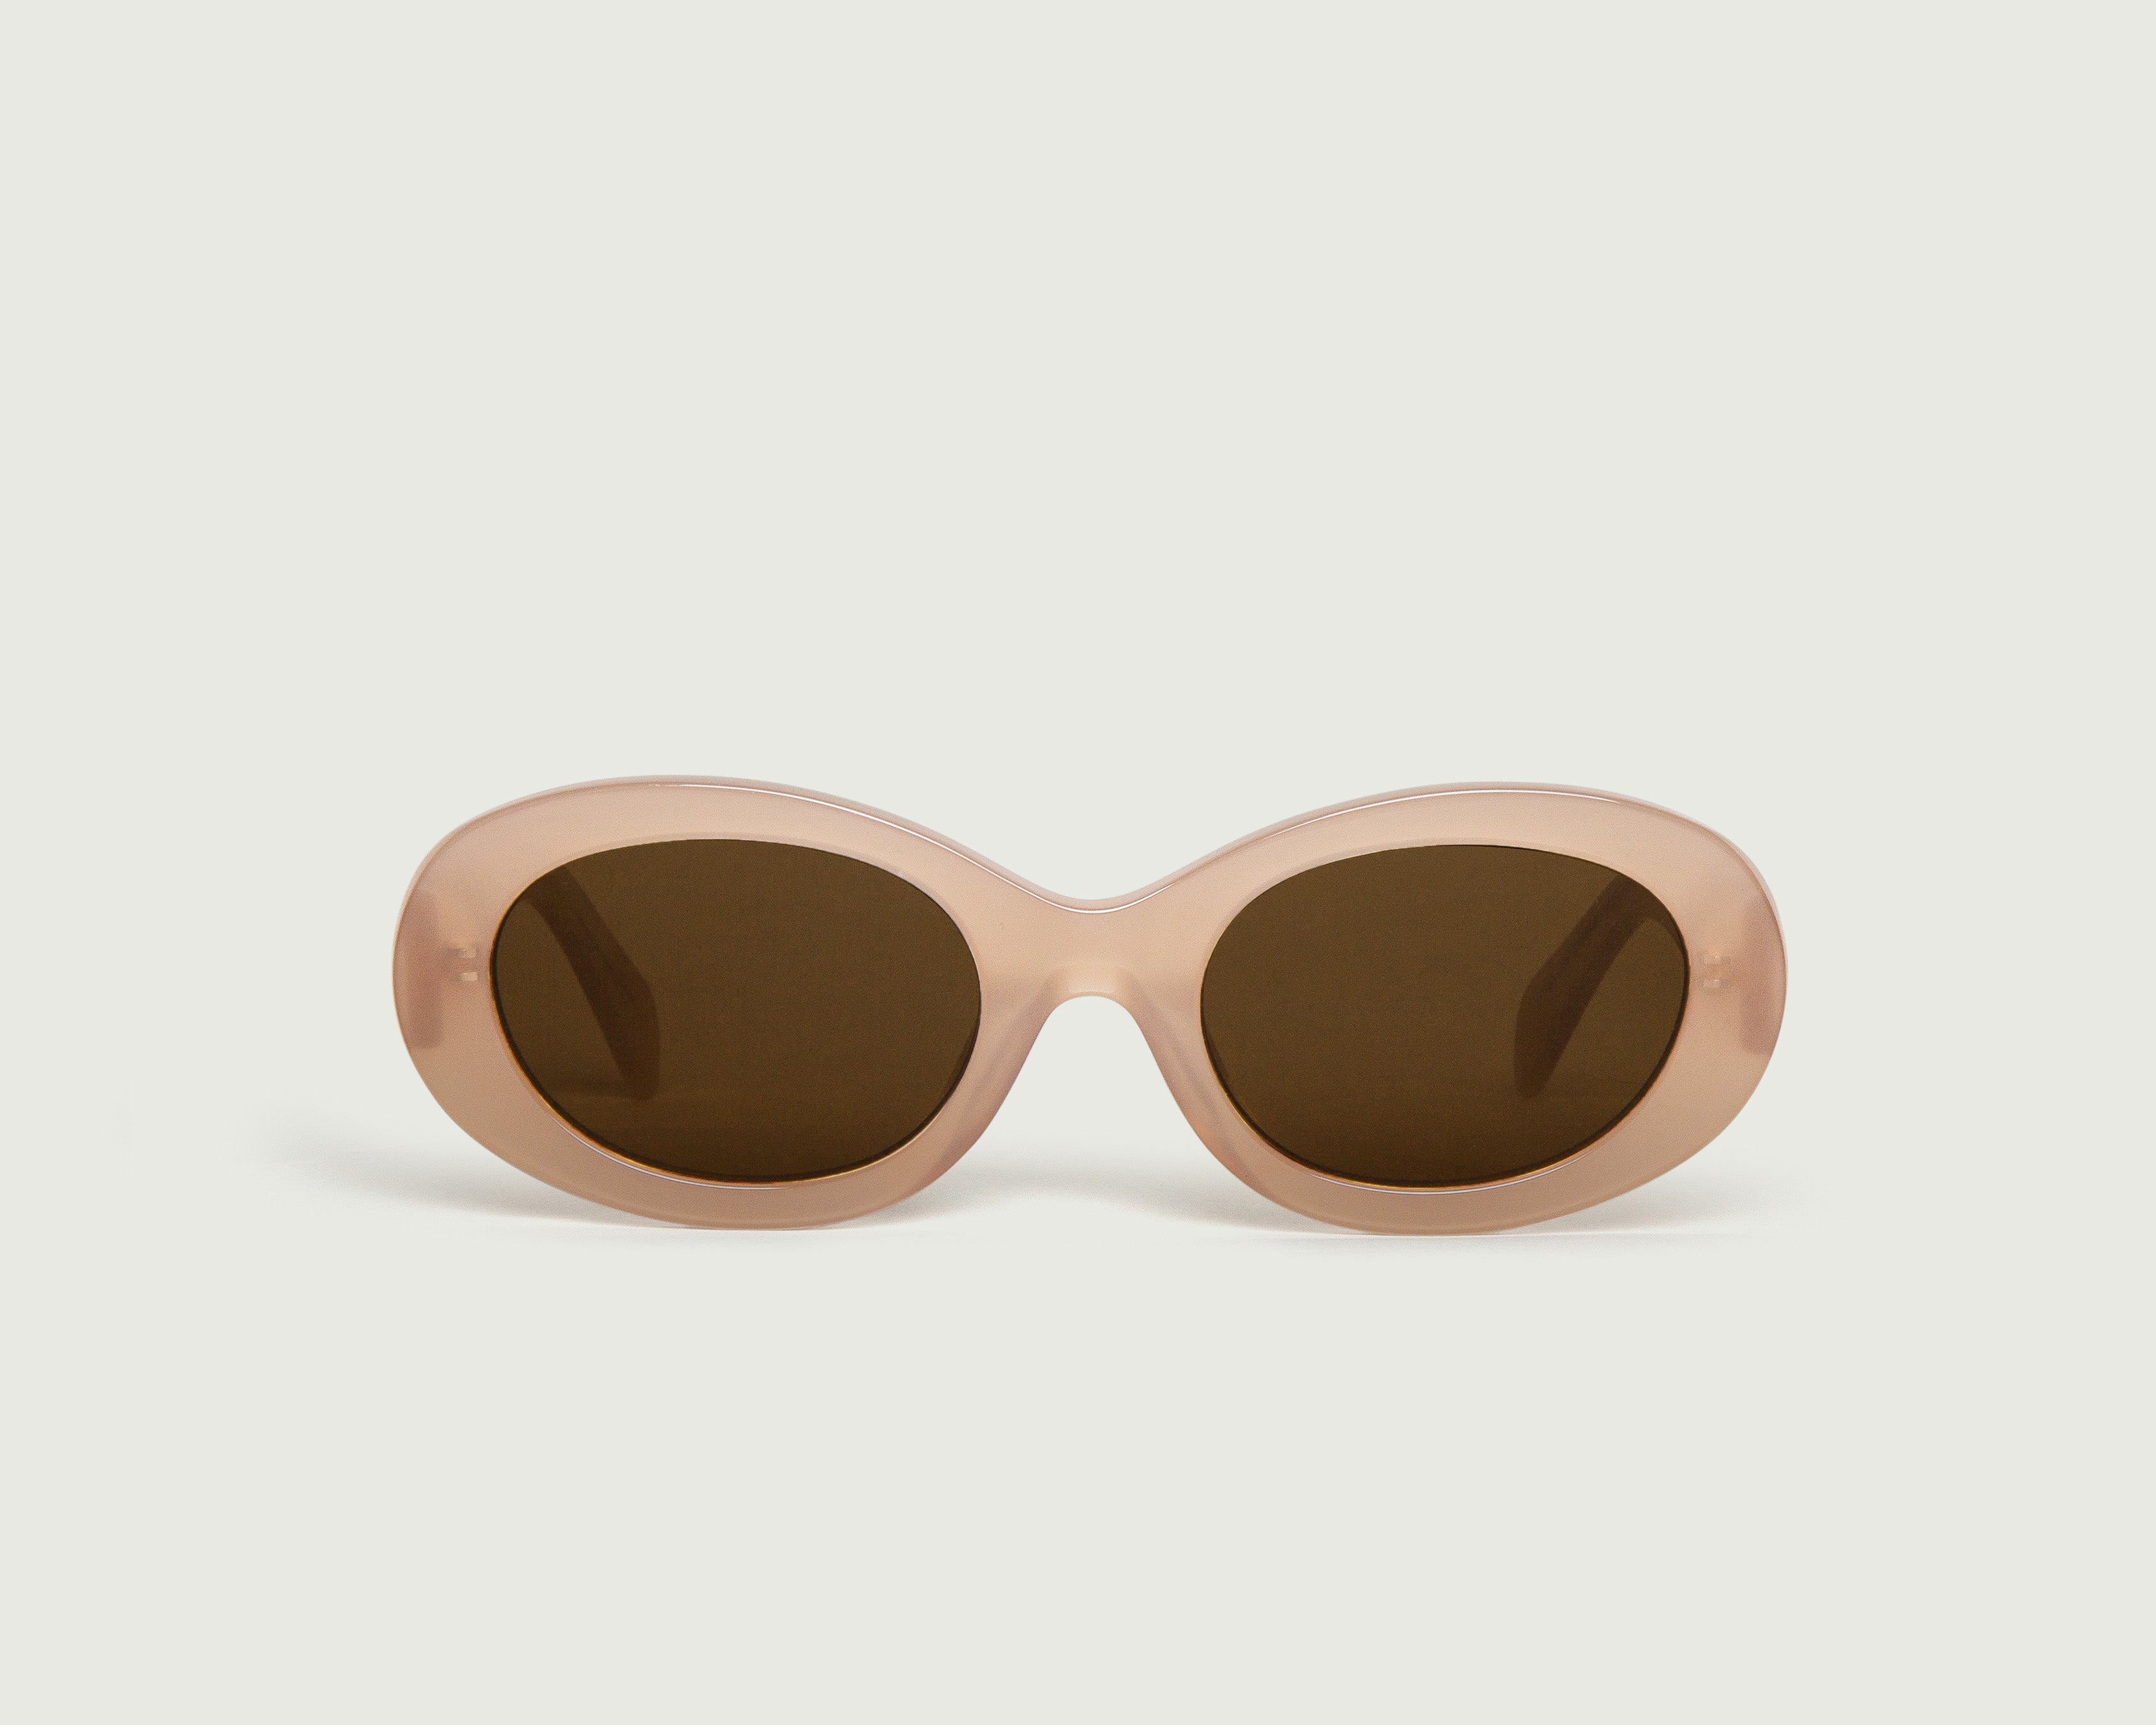 Nude::Rio Sunglasses oval brown bioacetate front